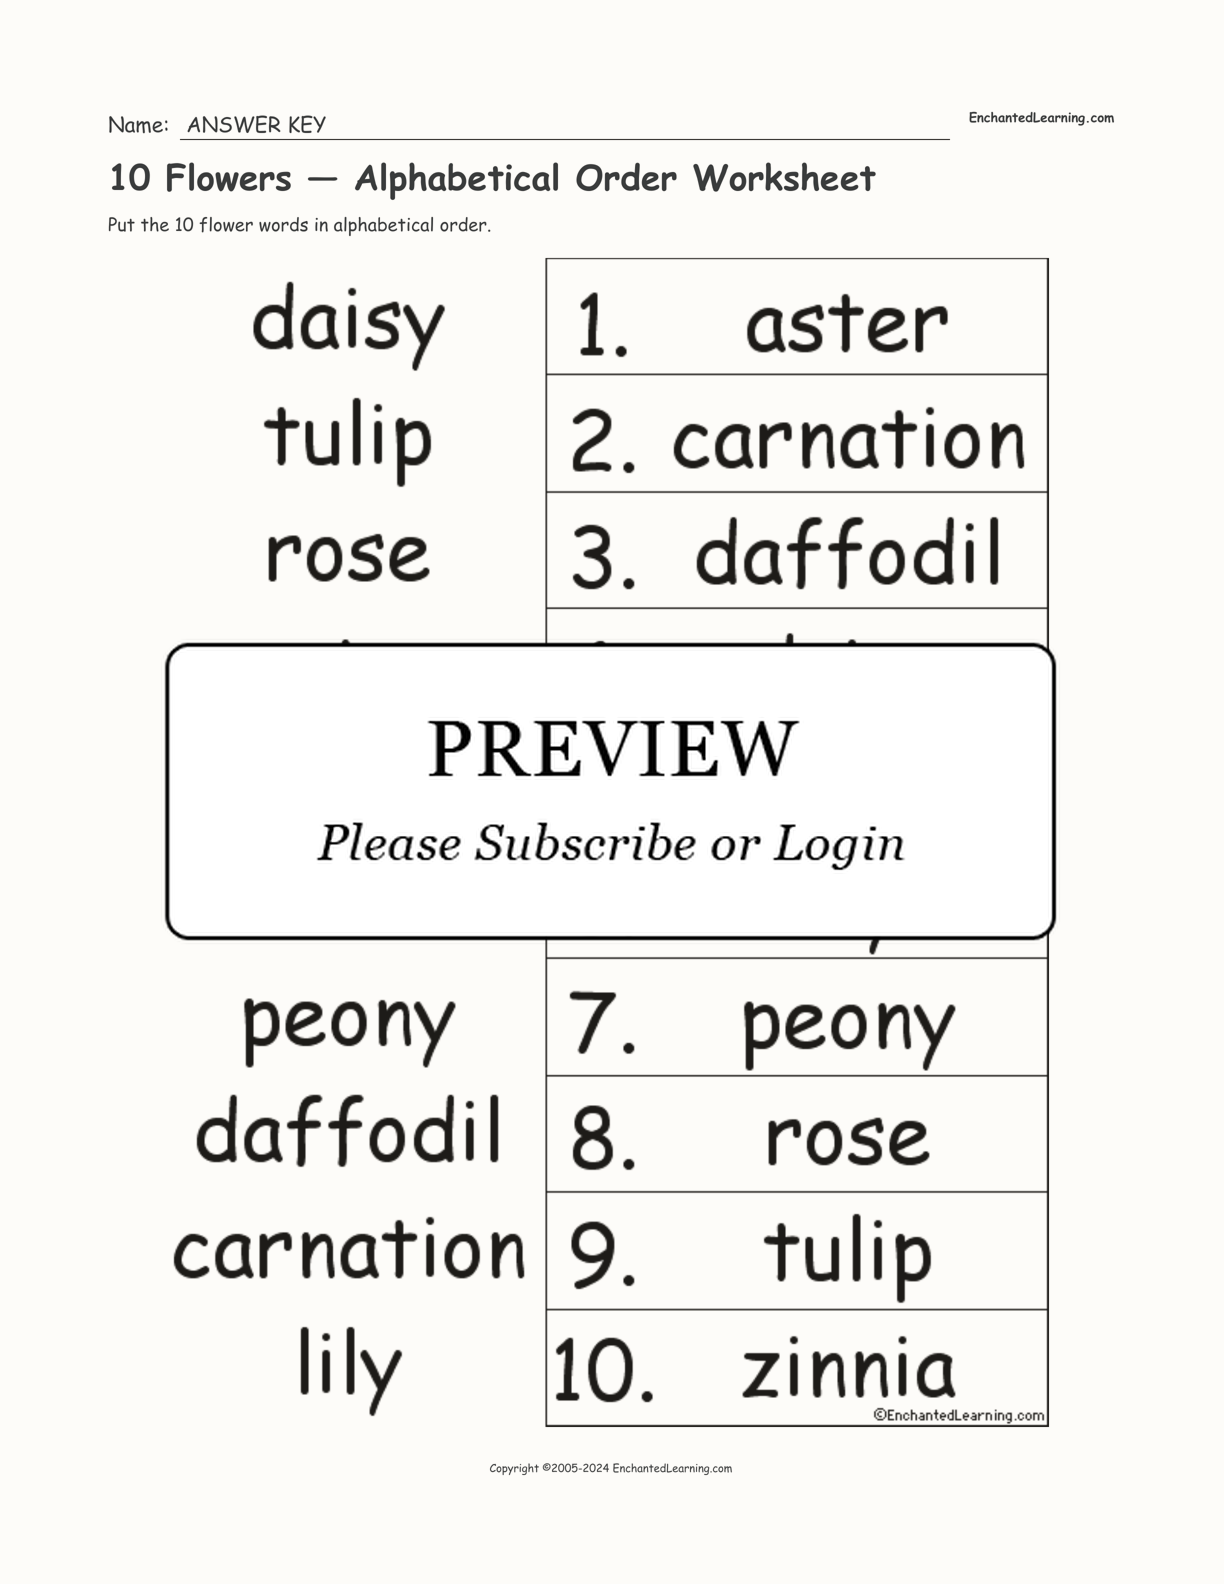 10 Flowers — Alphabetical Order Worksheet interactive worksheet page 2